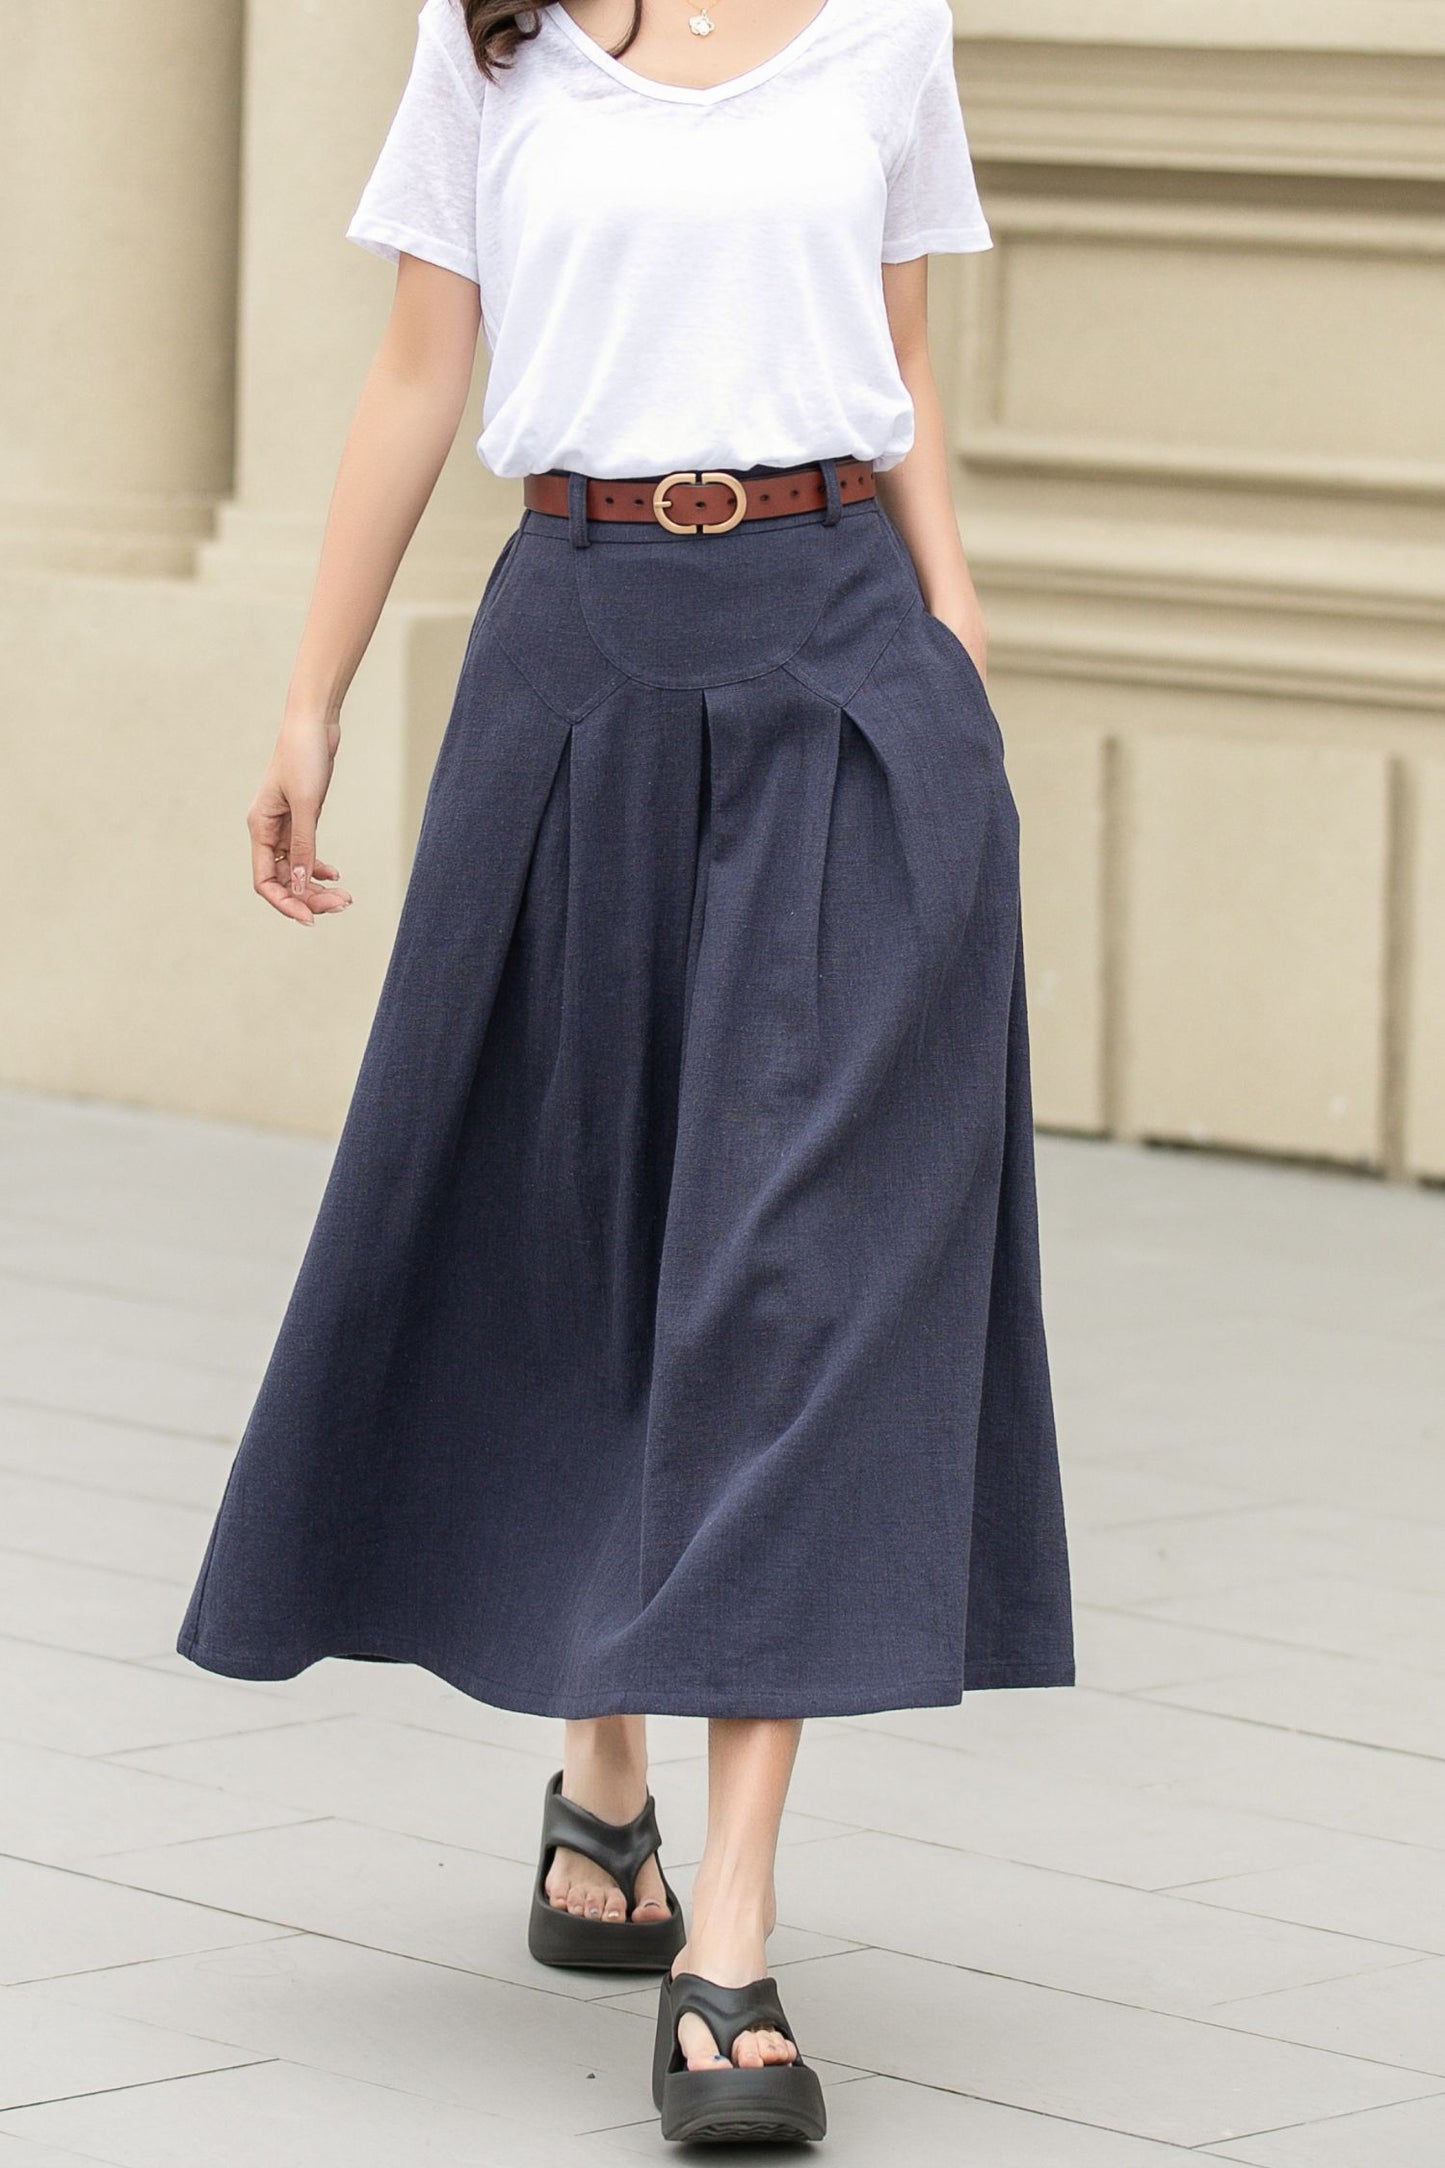 Blue long linen skirt with pockets 4943-Size S #CK2400155